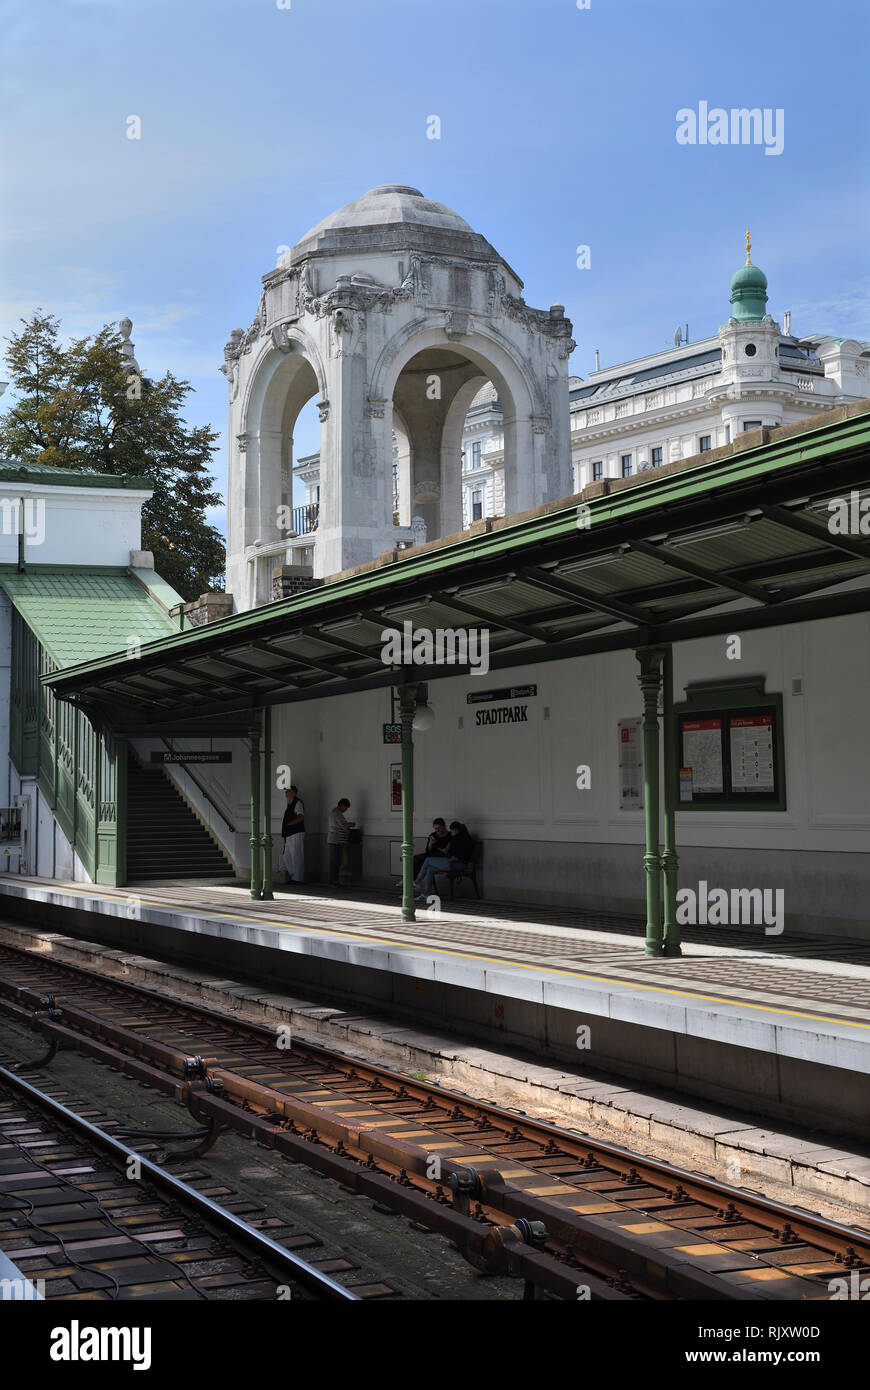 Stadtpark u bahn station hi-res stock photography and images - Alamy